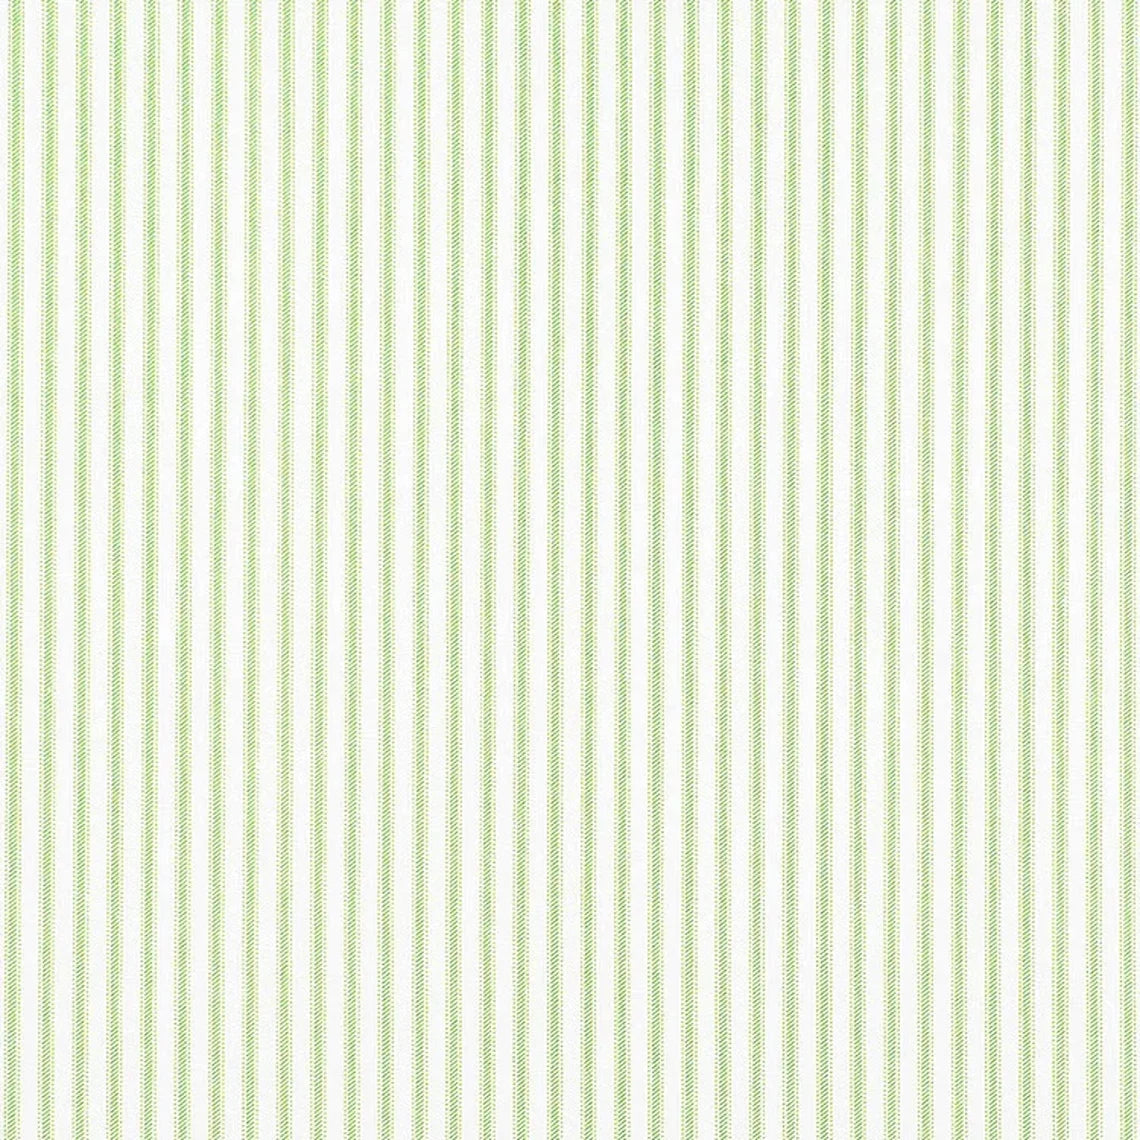 tailored valance in classic kiwi green ticking stripe on white